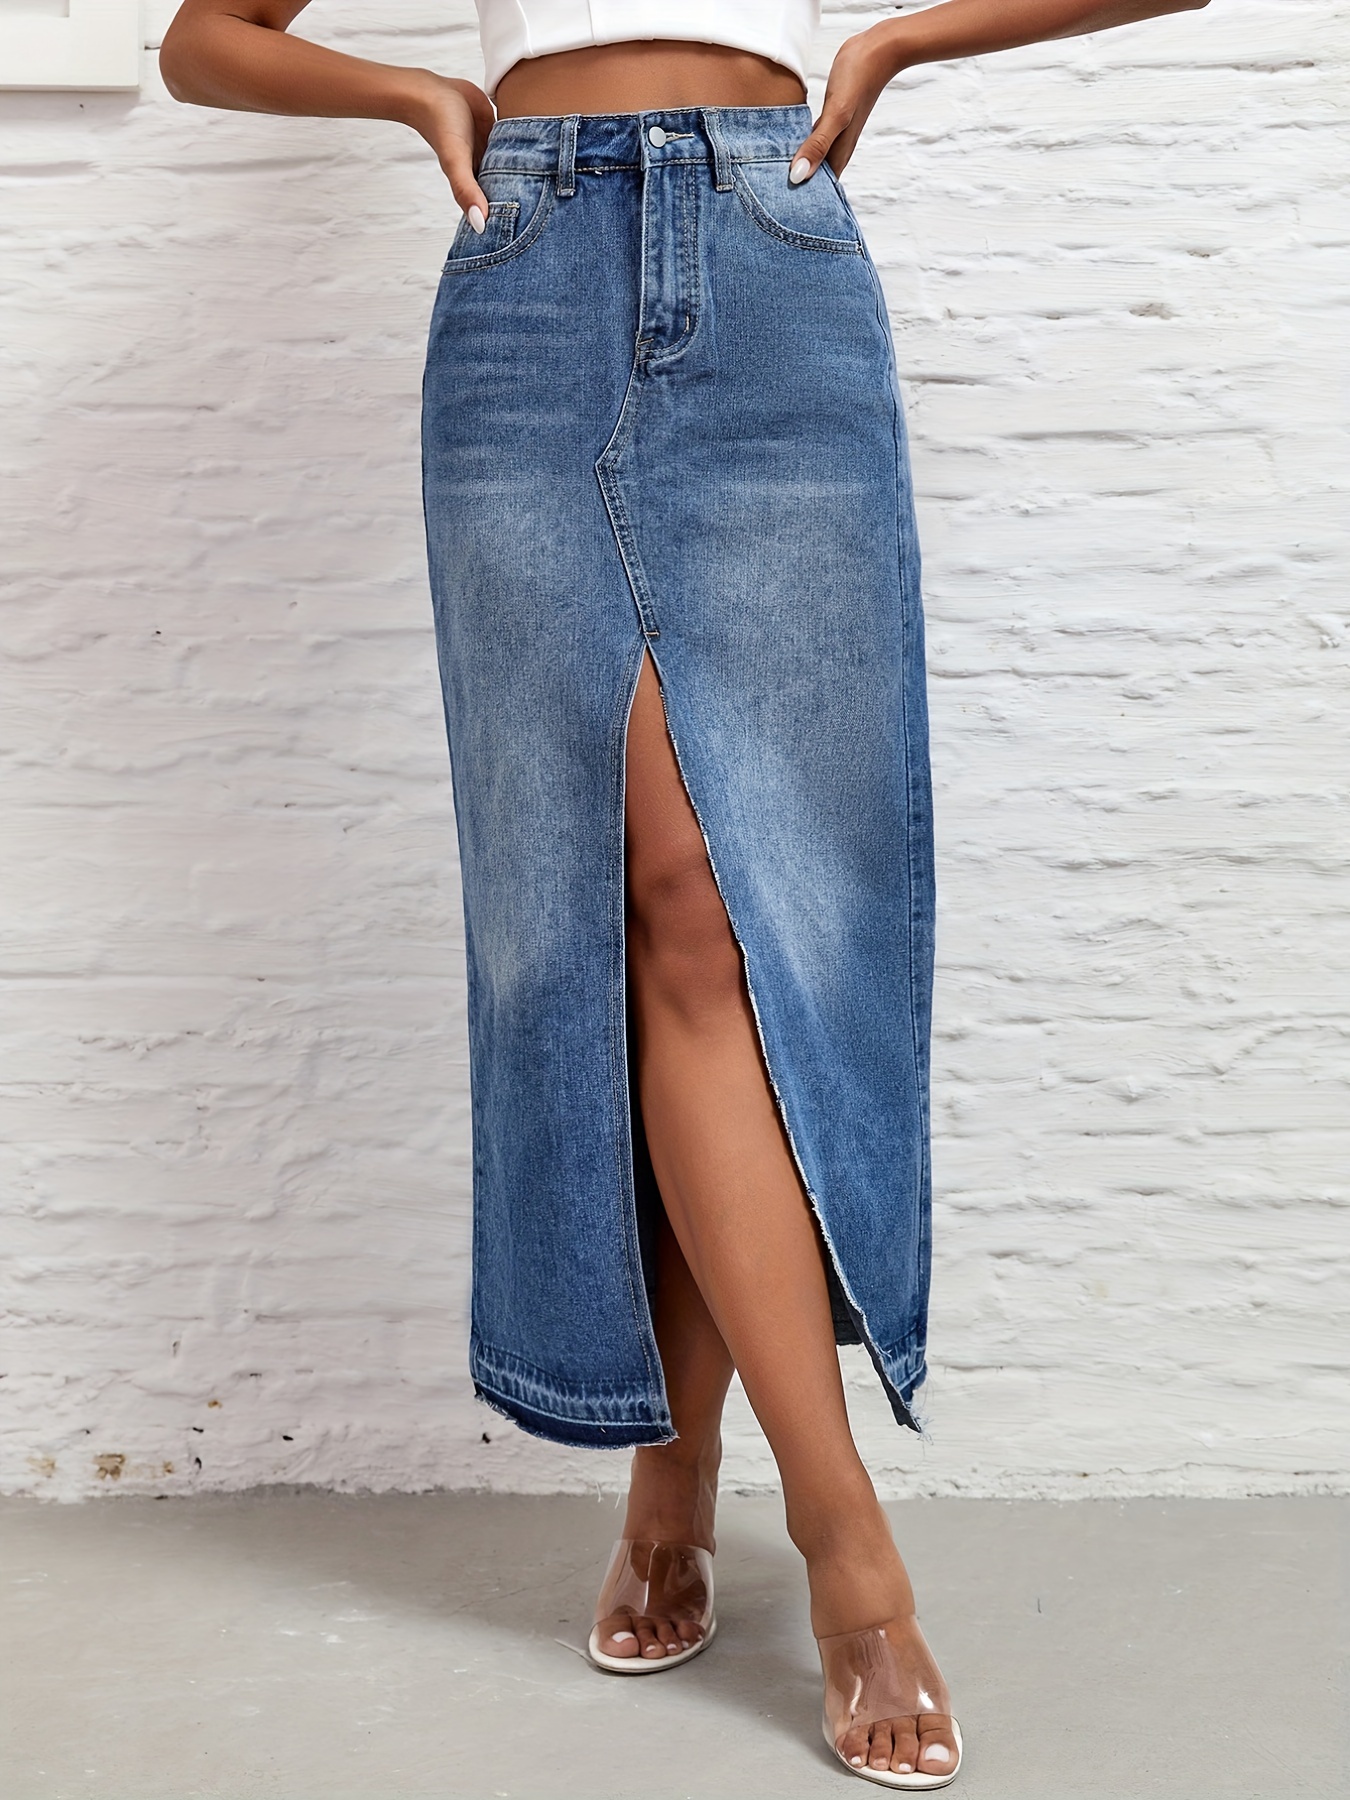 Casual Long Denim Skirts Women Vintage Jean Maxi Skirt Womens